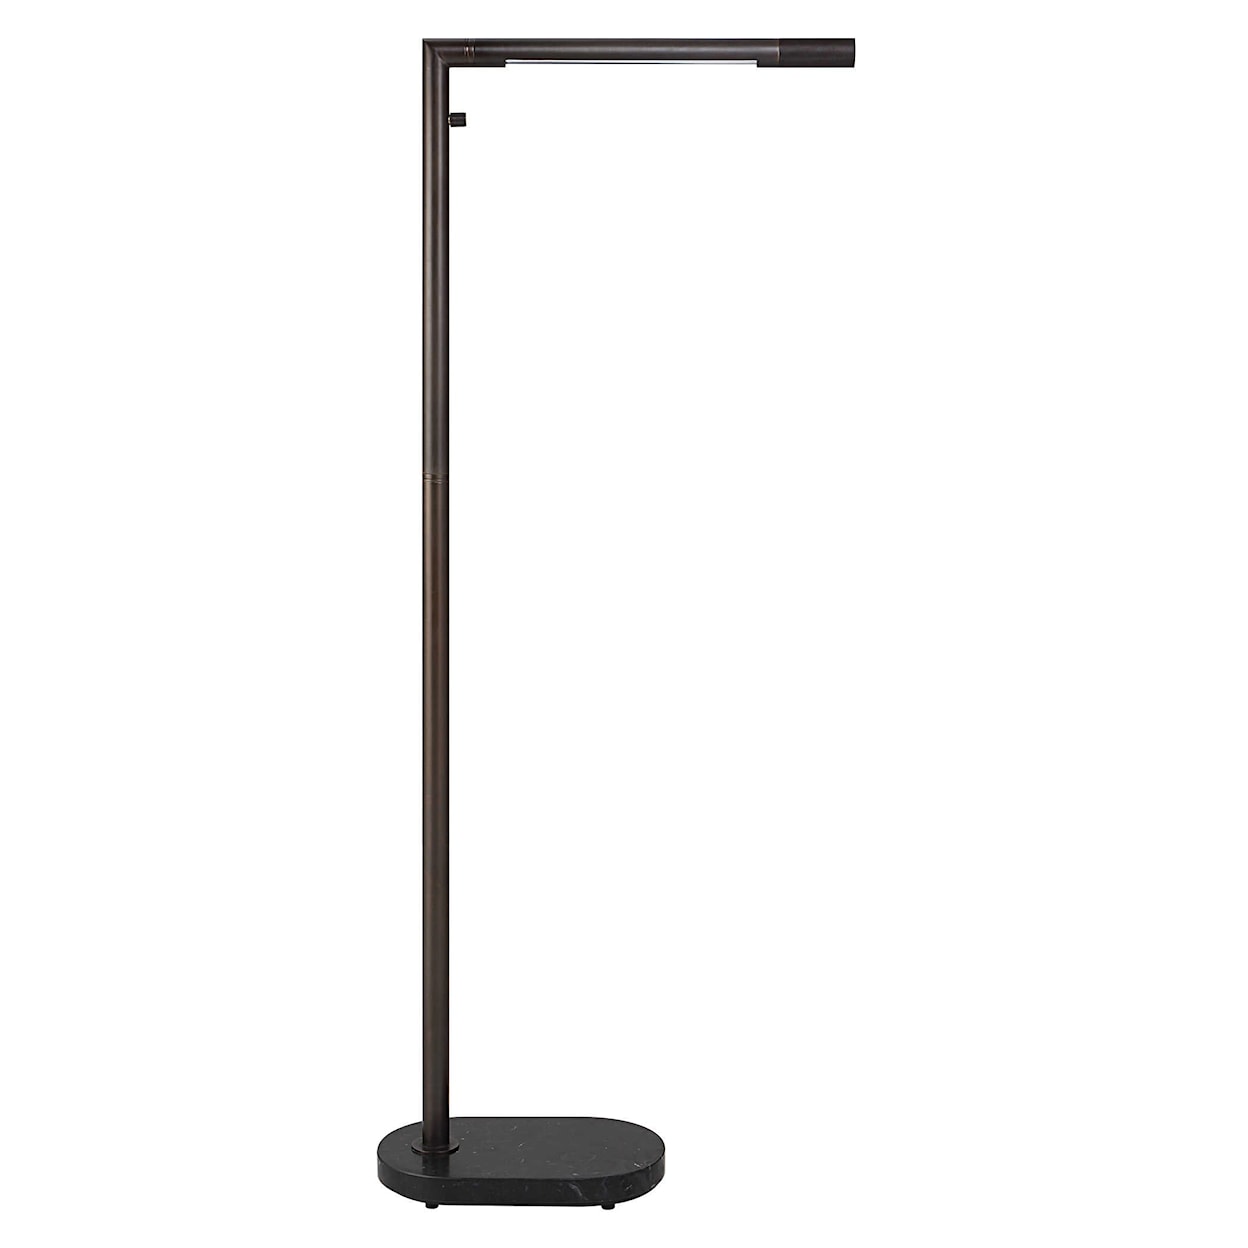 Uttermost Floor Lamps HIGHLIGHT FLOOR LAMP - BRONZE